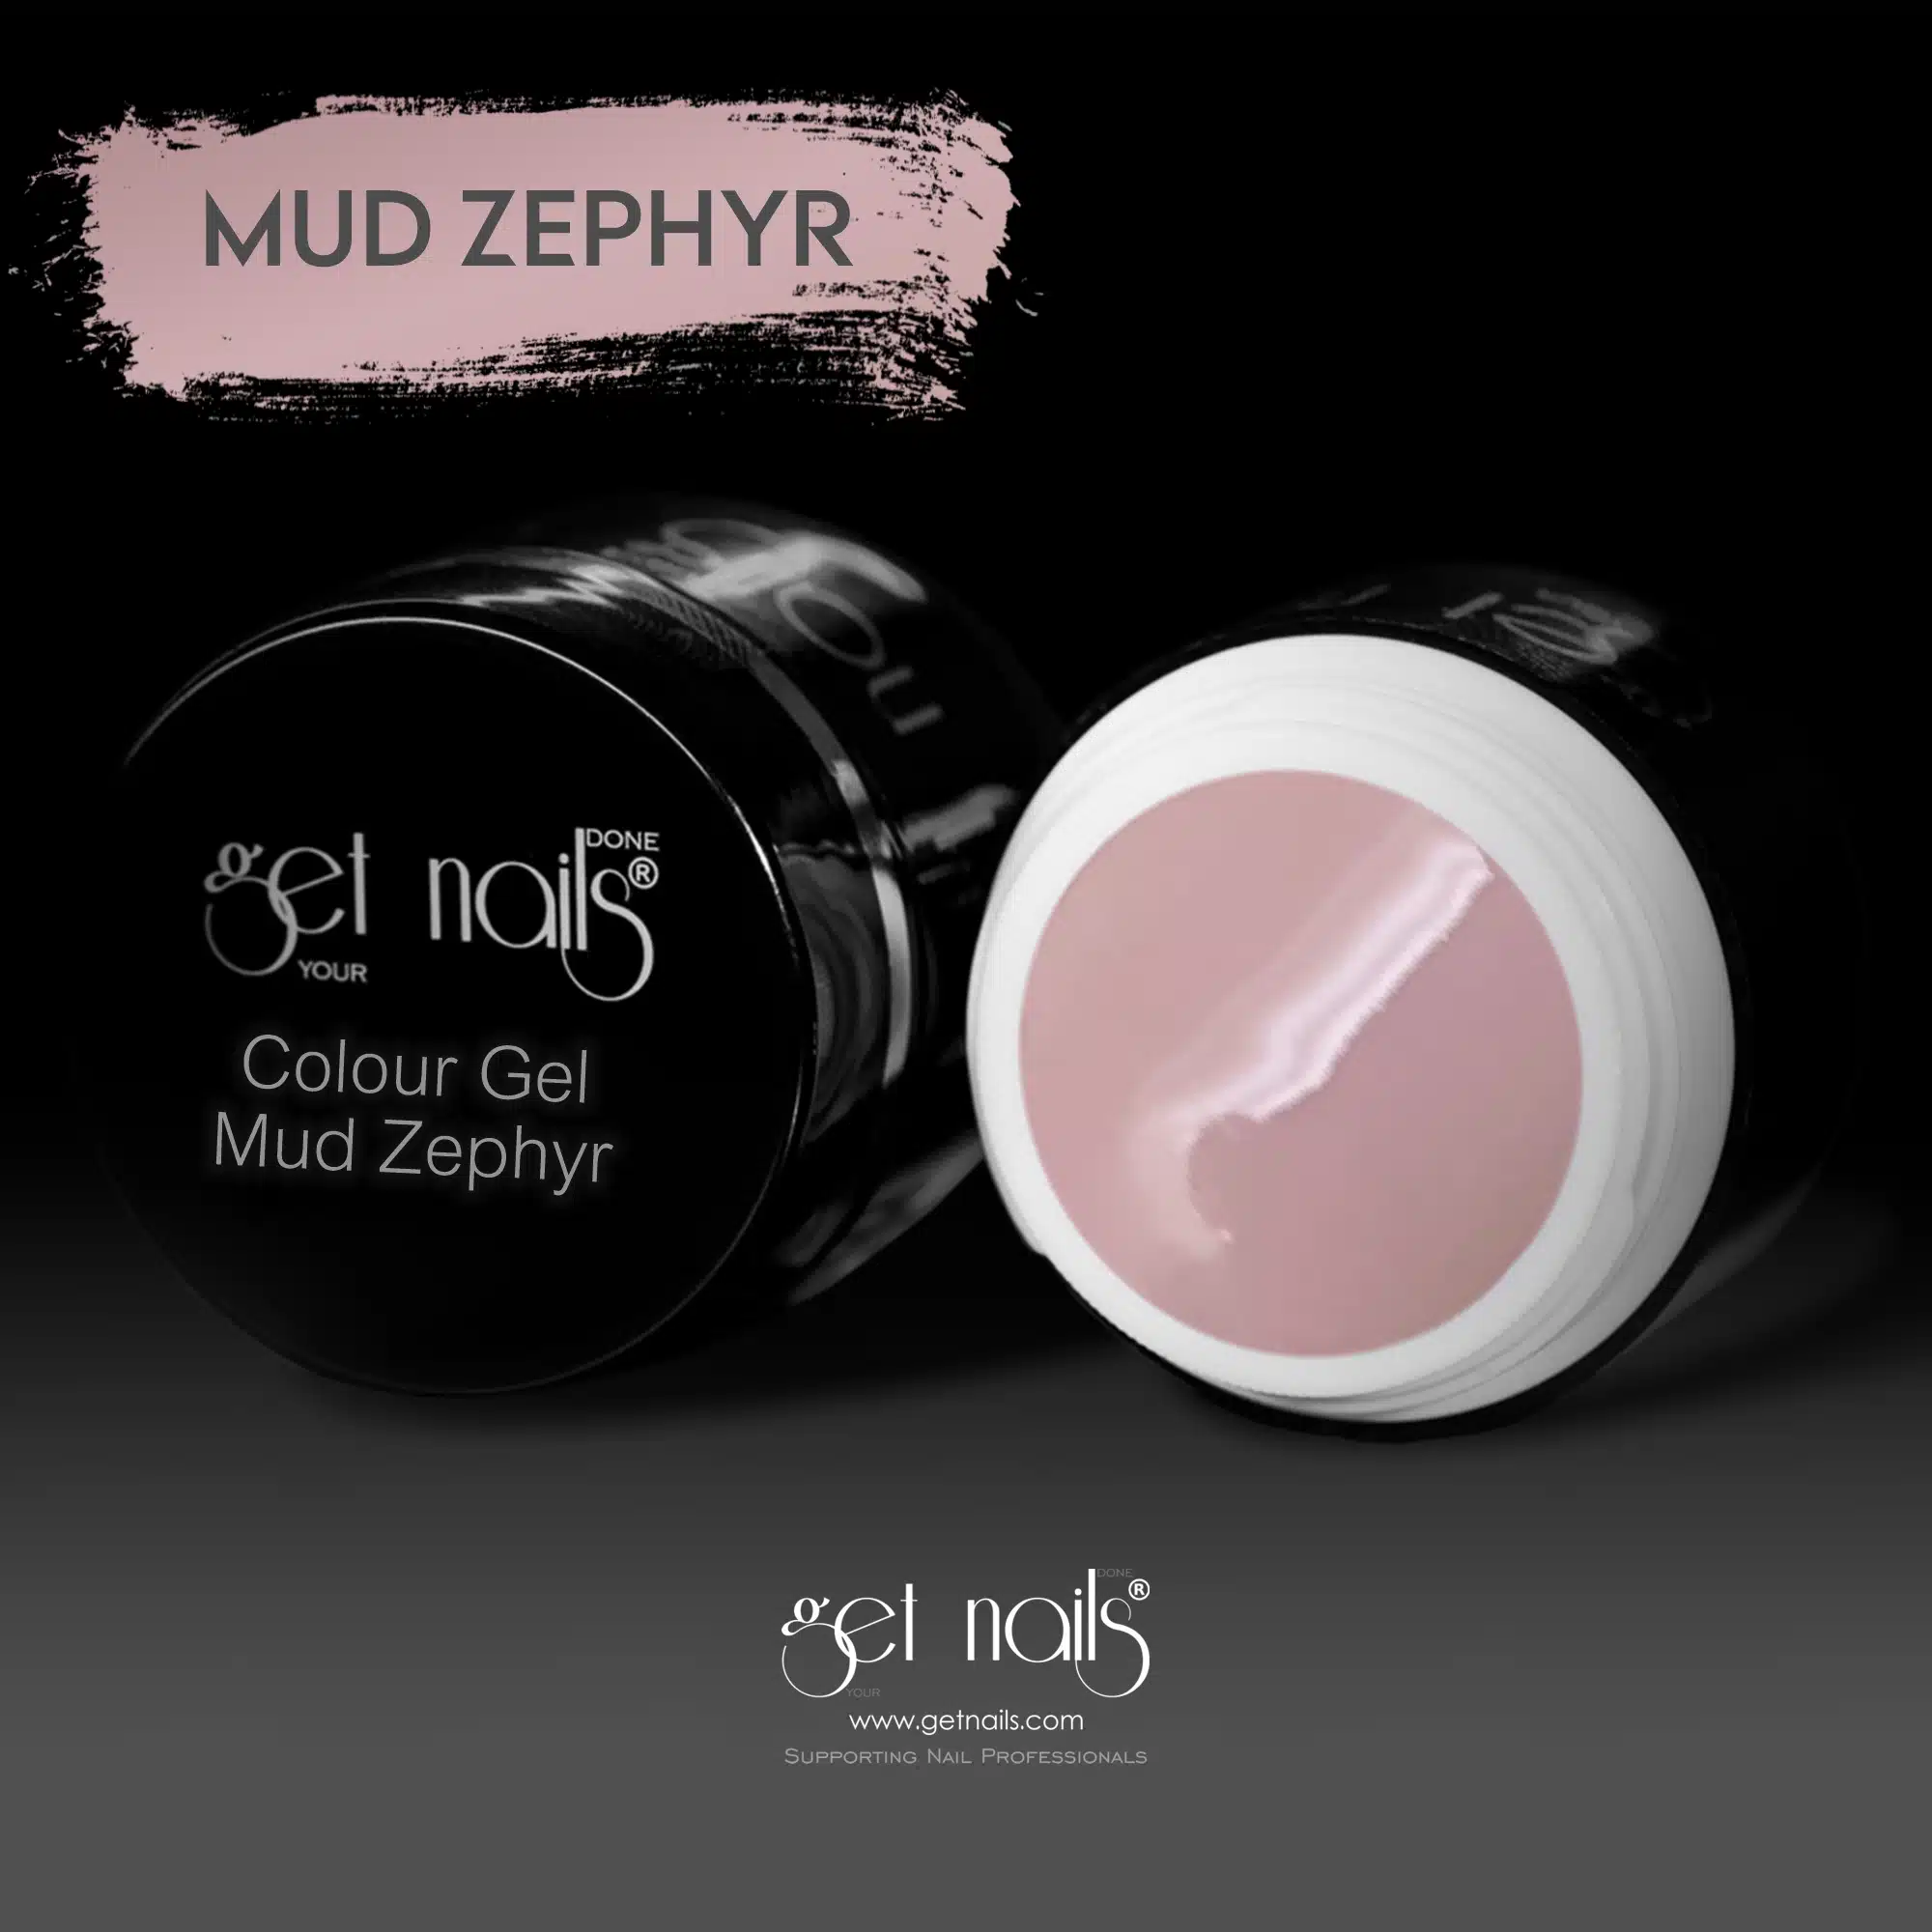 Get Nails Austria - Color Gel Mud Zephyr 5g